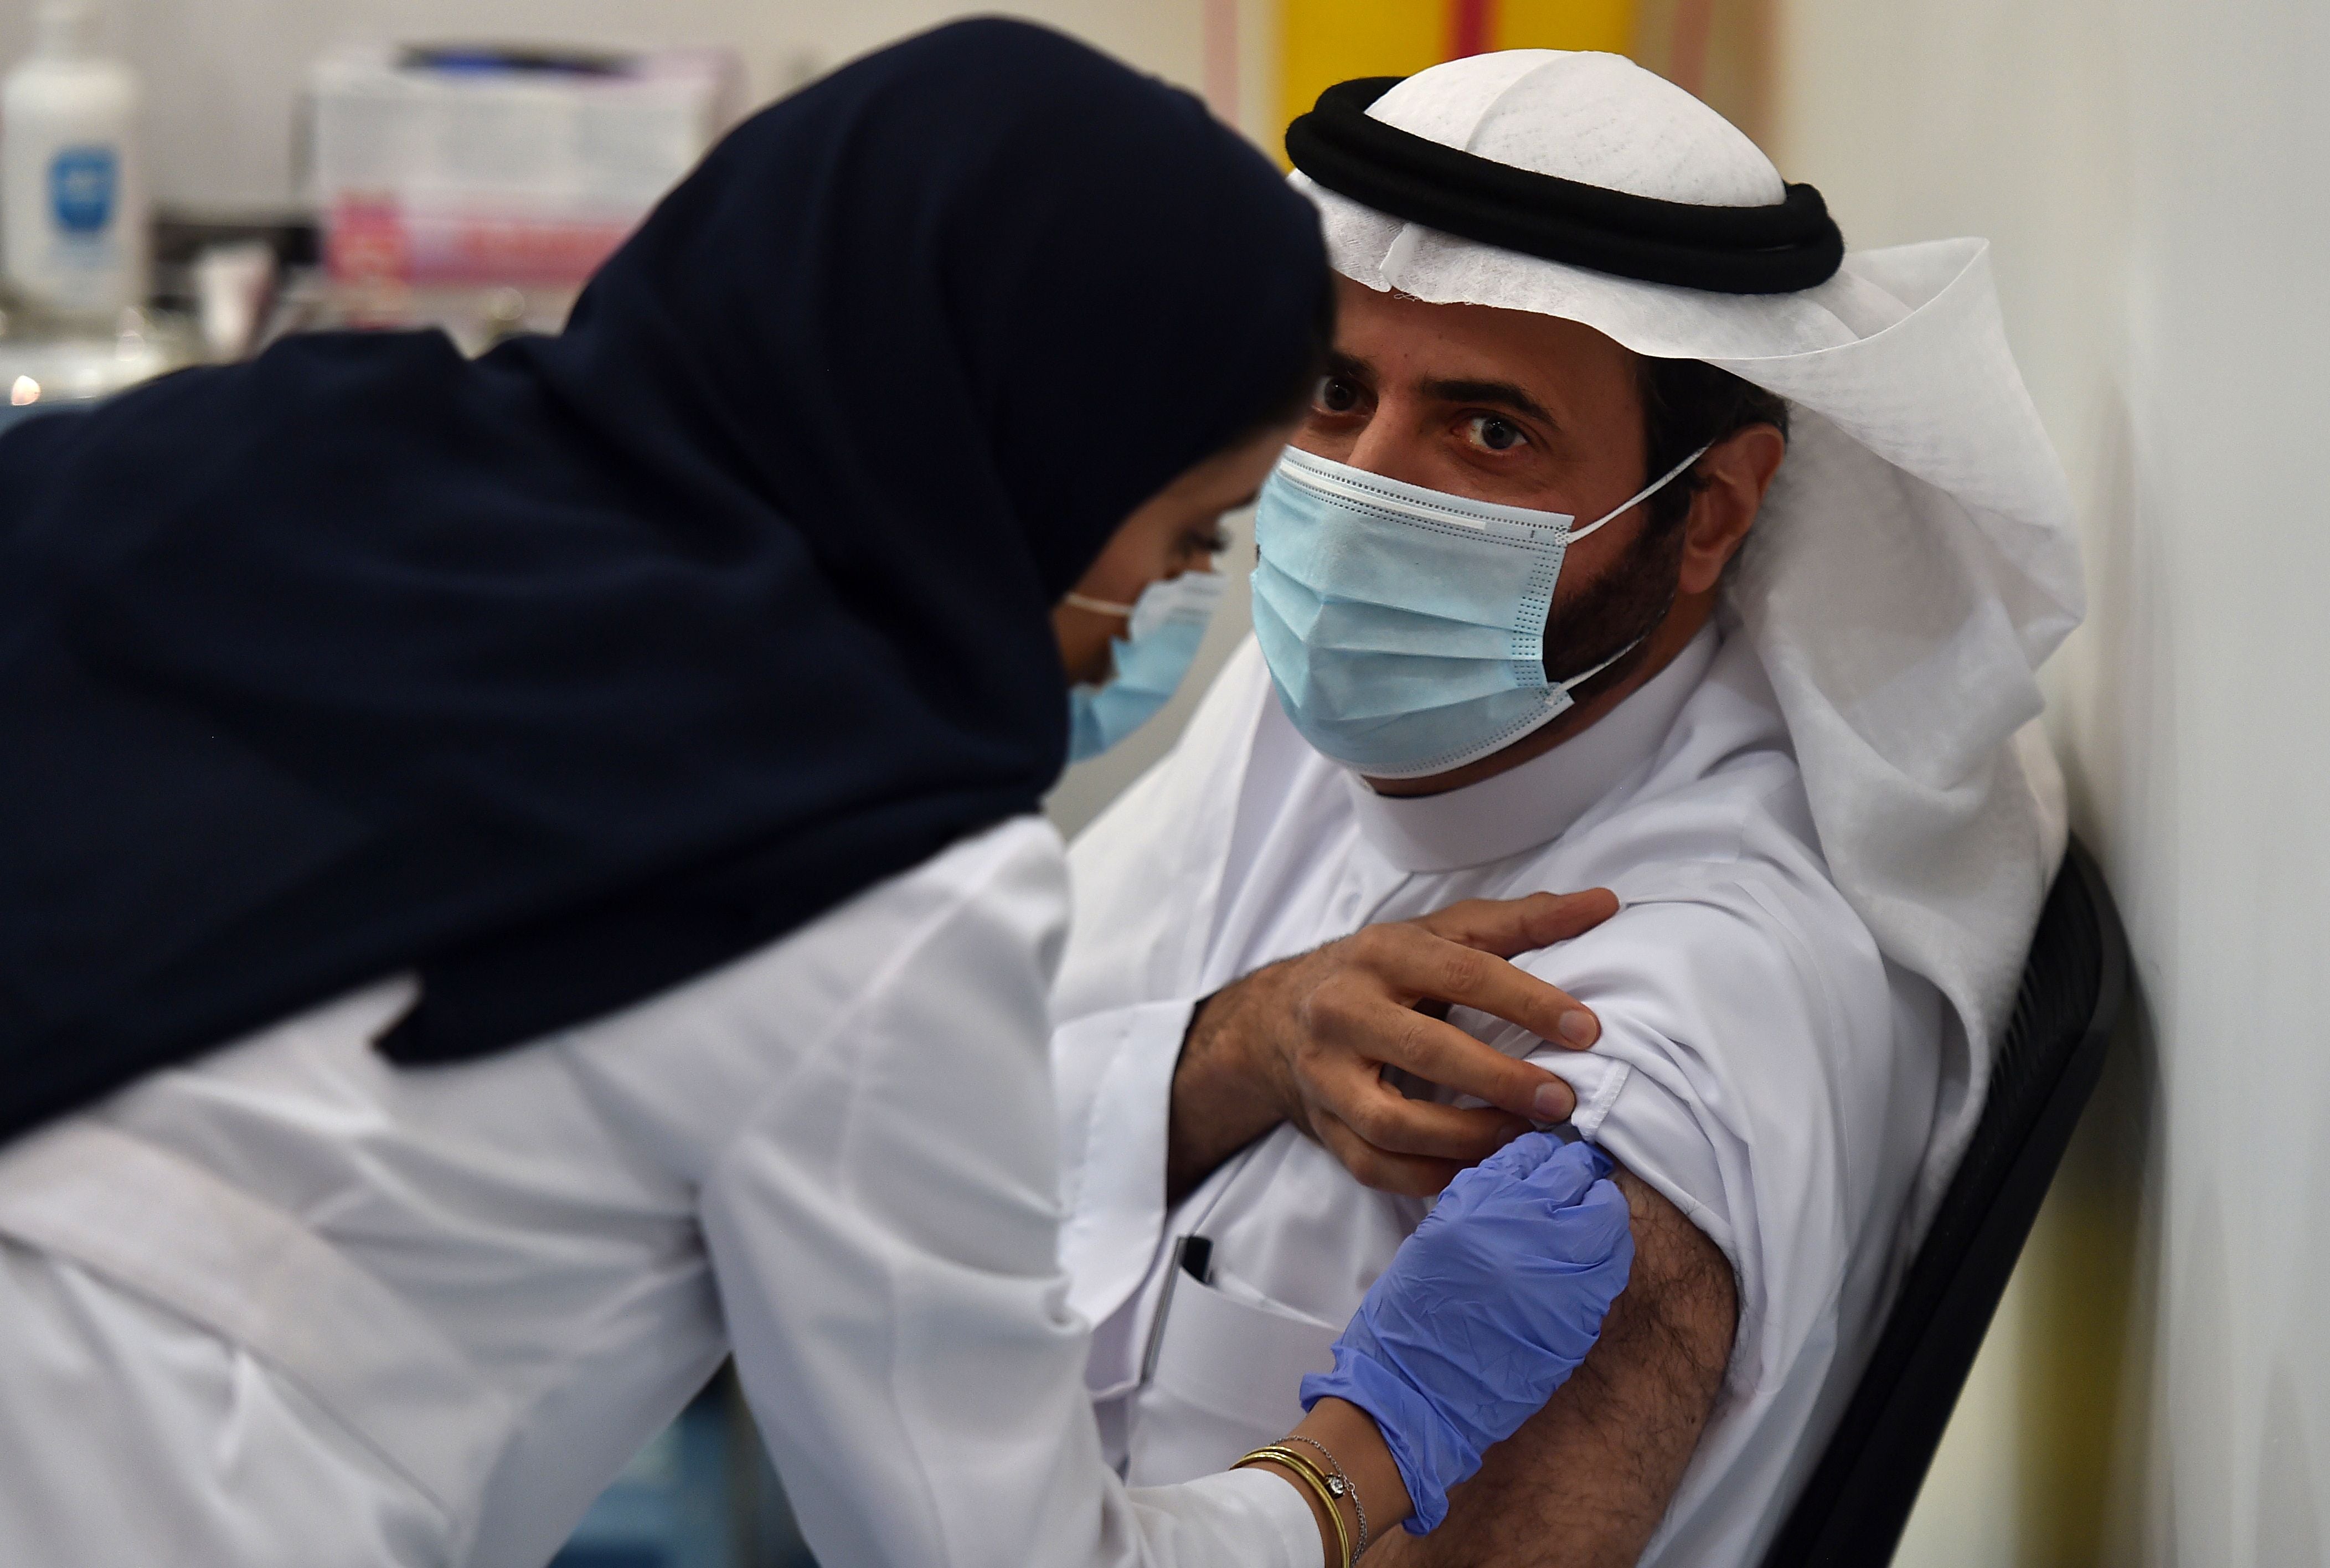 Saudi Arabia’s Health Minister Tawfiq al-Rabiah receiving the Pfizer-BioNTech COVID-19 coronavirus vaccine (Photo by FAYEZ NURELDINE/AFP via Getty Images)